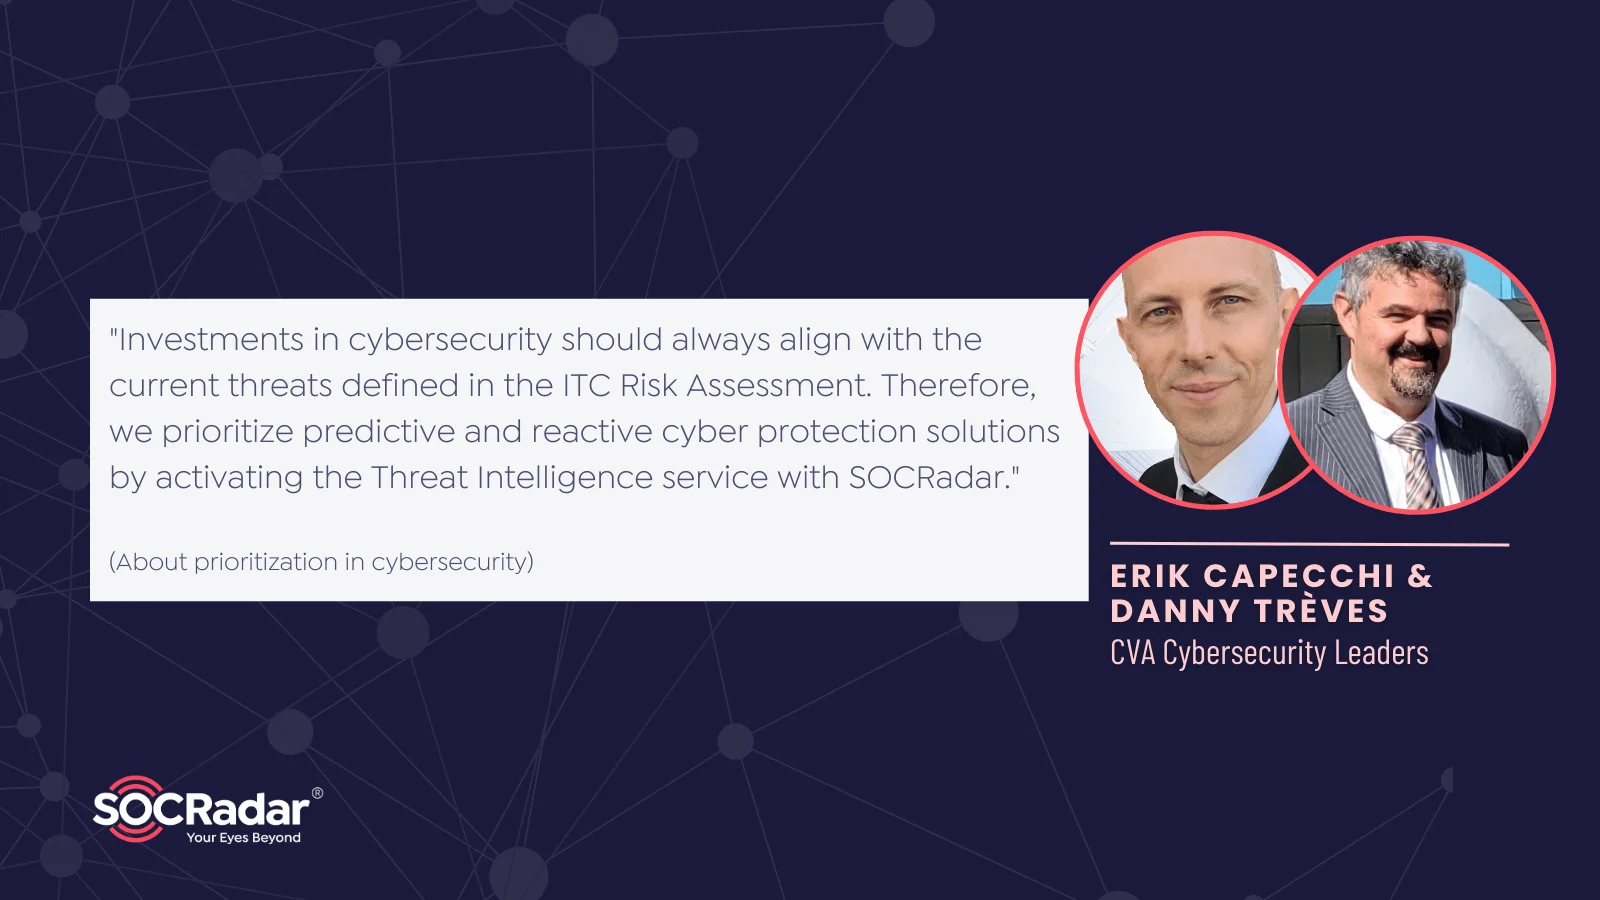 Danny Treves & Erik Capecchi on Prioritization in Cybersecurity